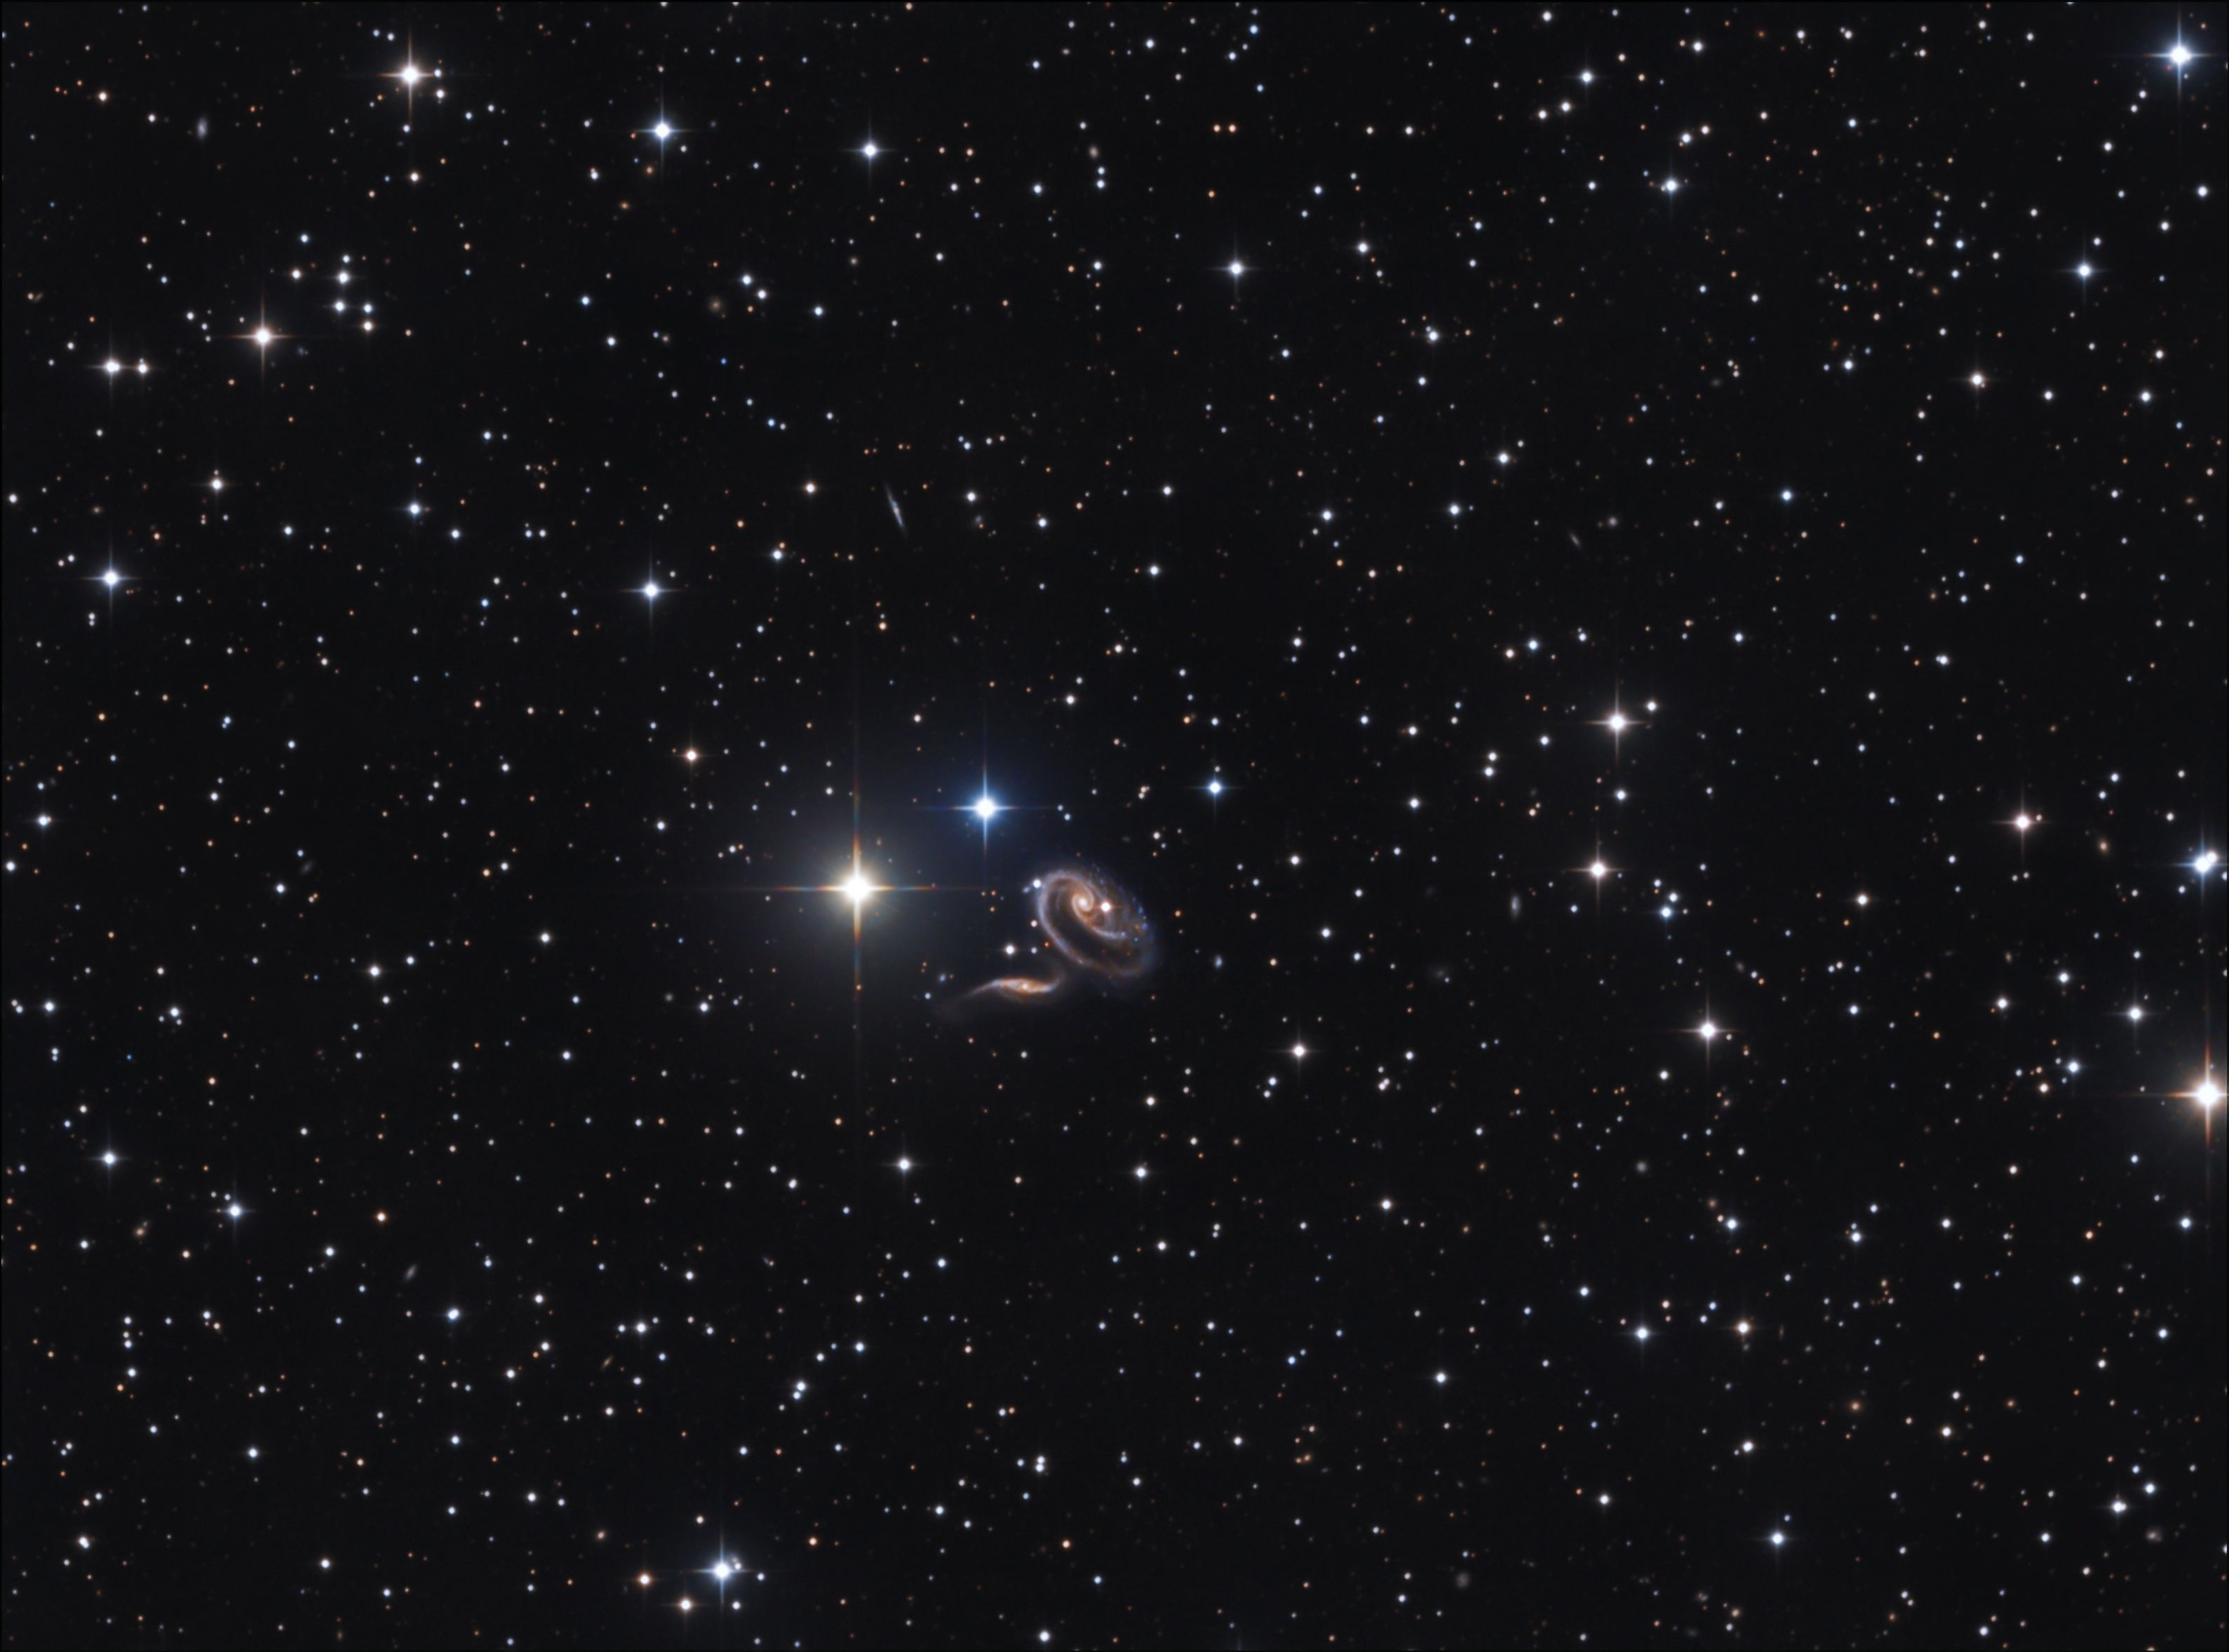  Peculiar Galaxies of Arp 273 